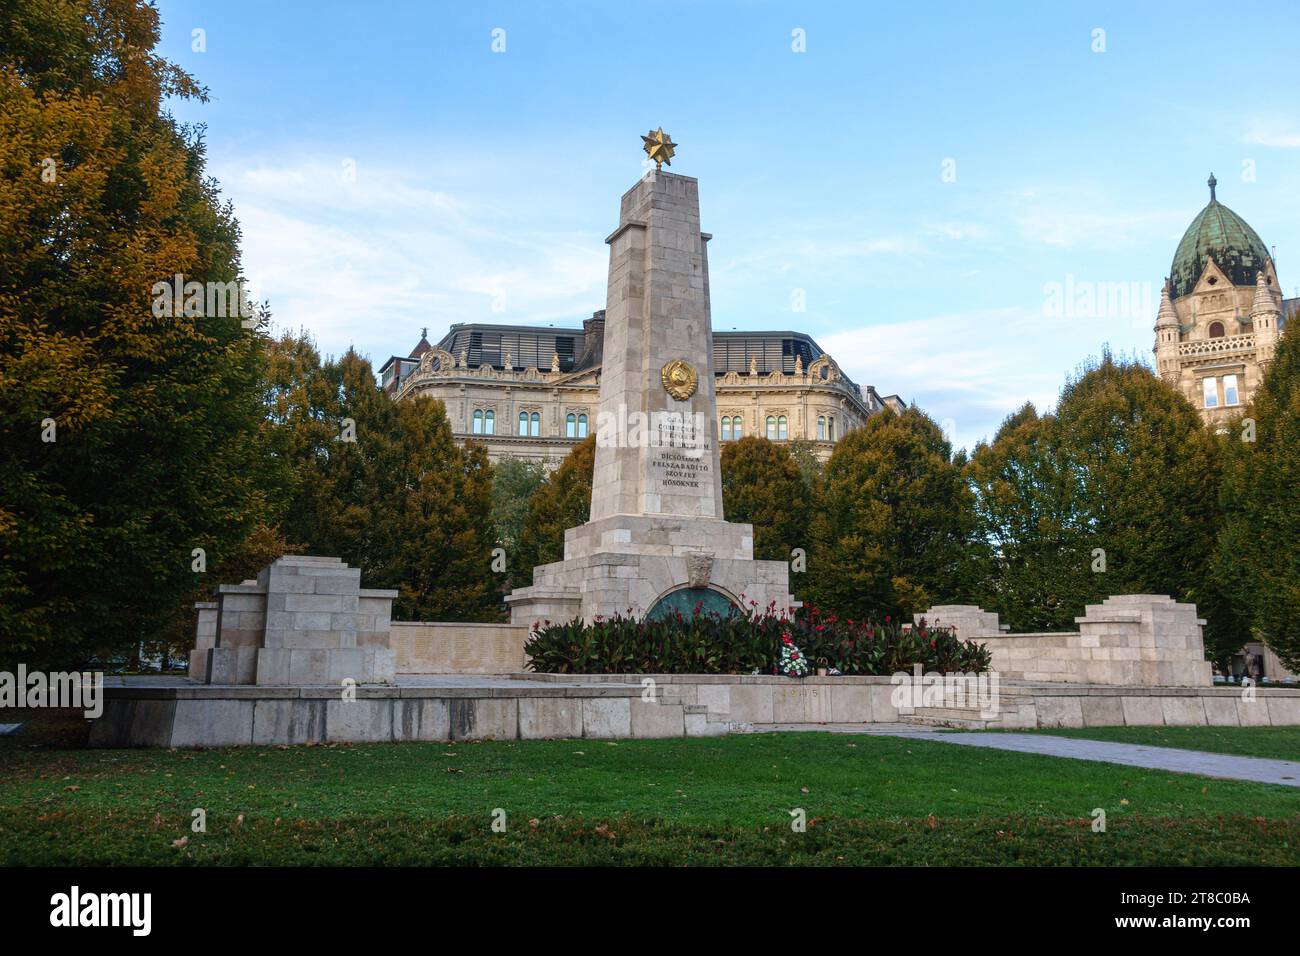 The Soviet war memorial on Szabadsag ter in Budapest, Hungary Stock Photo